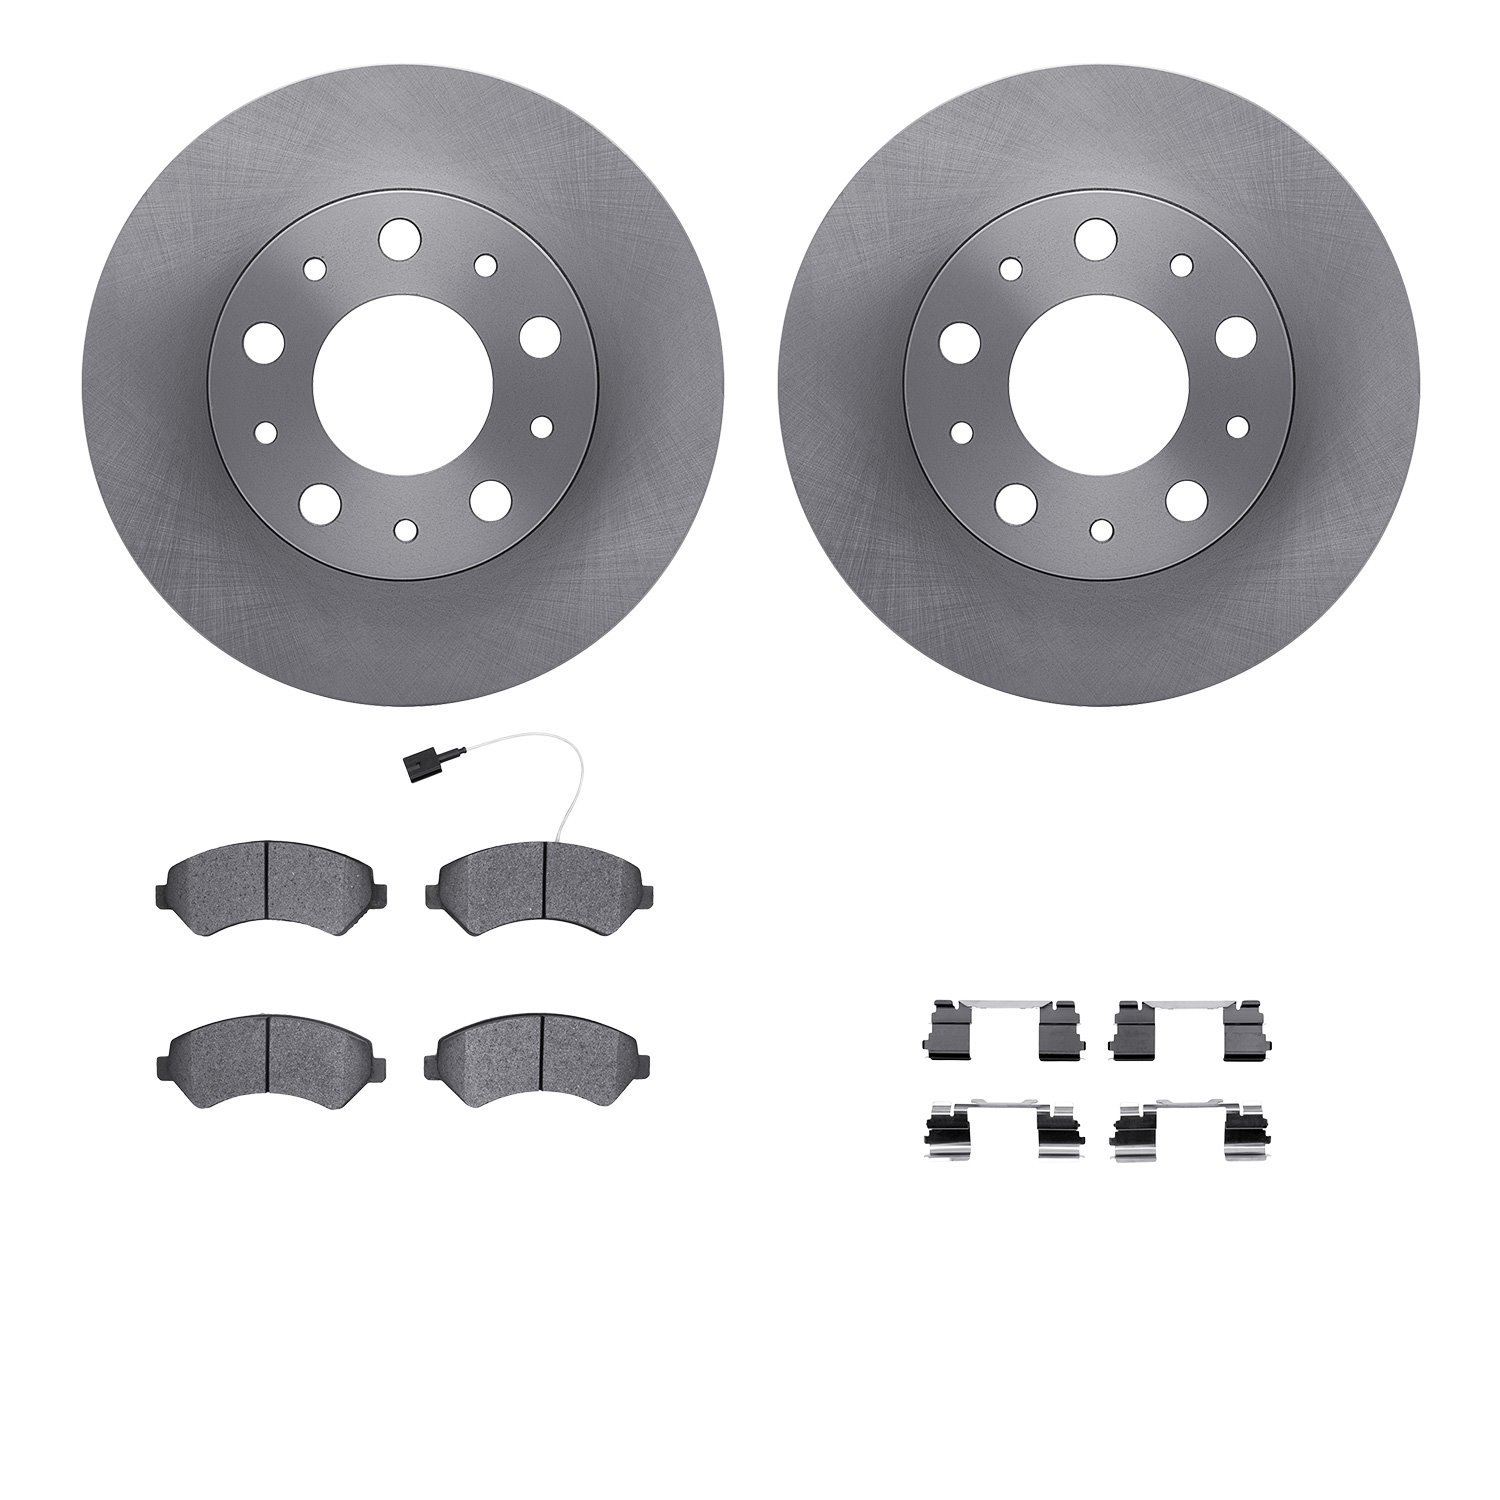 6212-40498 Brake Rotors w/Heavy-Duty Brake Pads Kit & Hardware, Fits Select Mopar, Position: Front